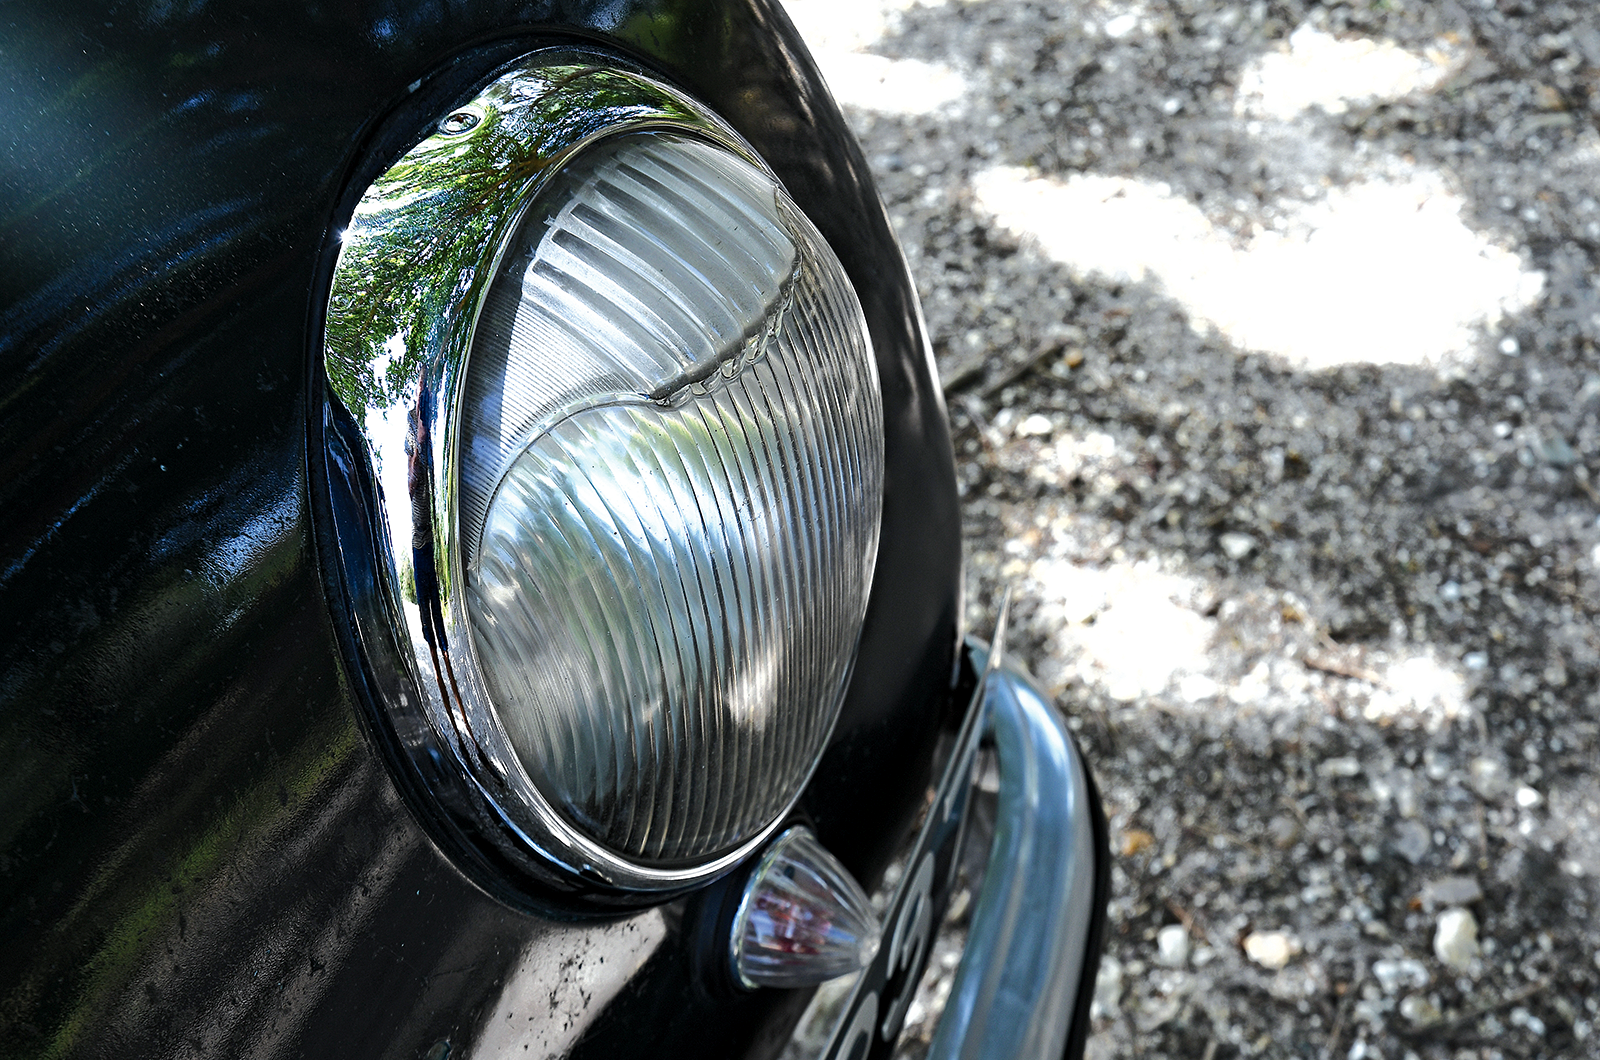 Classic & Sports Car – Bristol 405 vs Lancia Aurelia B10: focus on the finer things